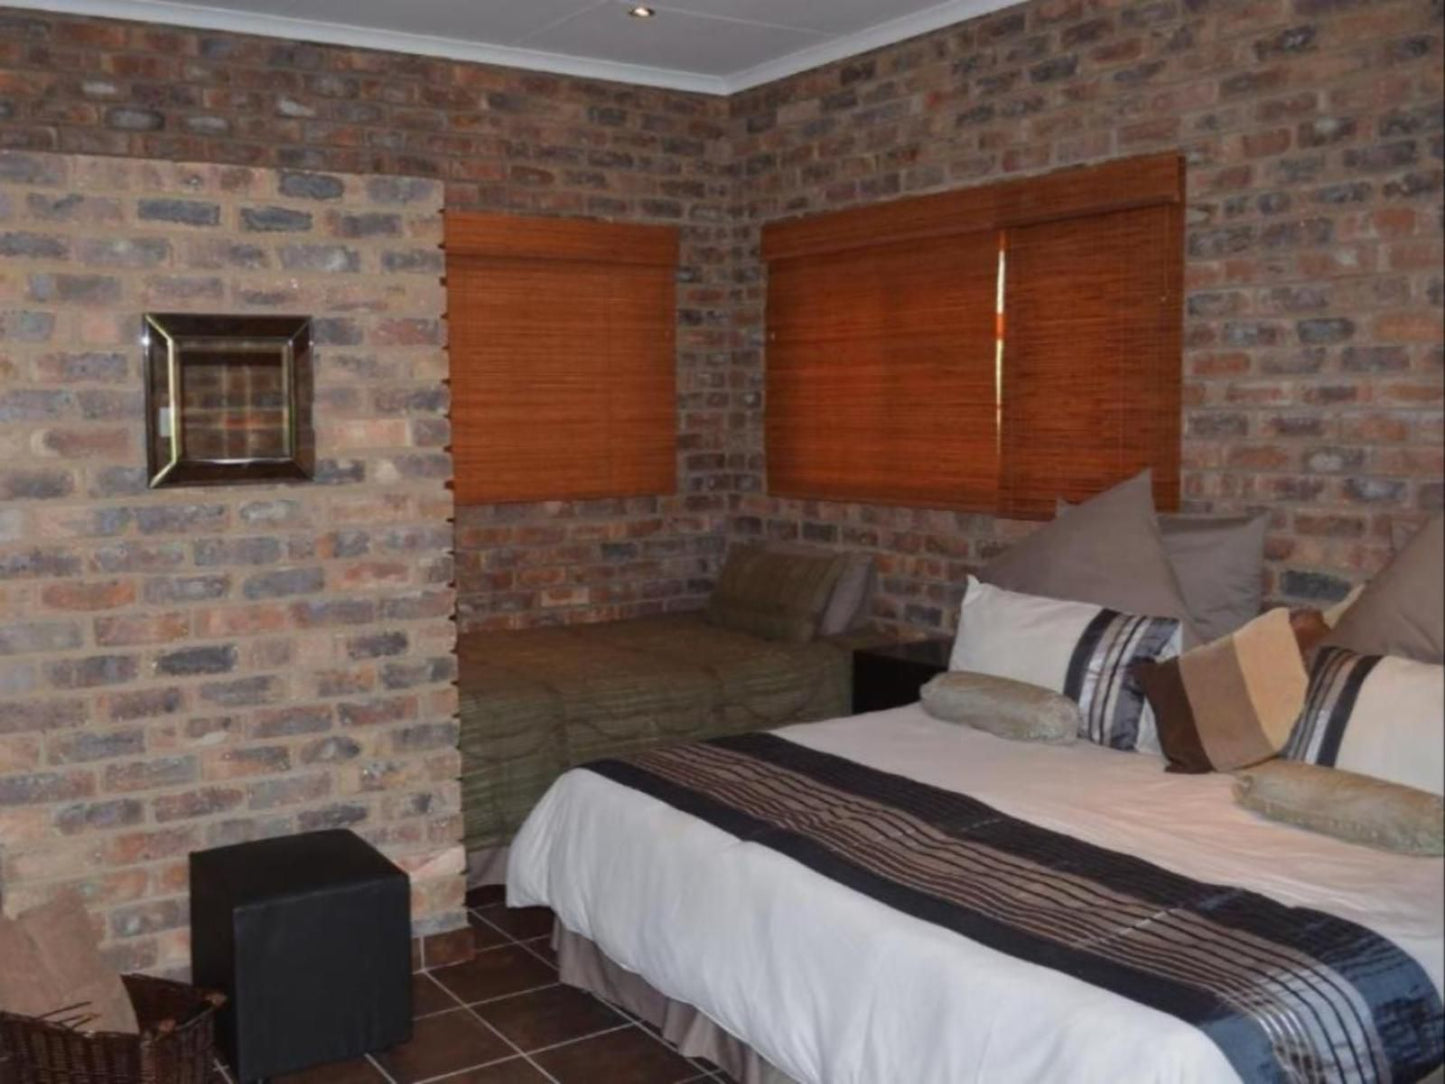 Mon Repos Guest Farm Bela Bela Warmbaths Limpopo Province South Africa Wall, Architecture, Bedroom, Brick Texture, Texture